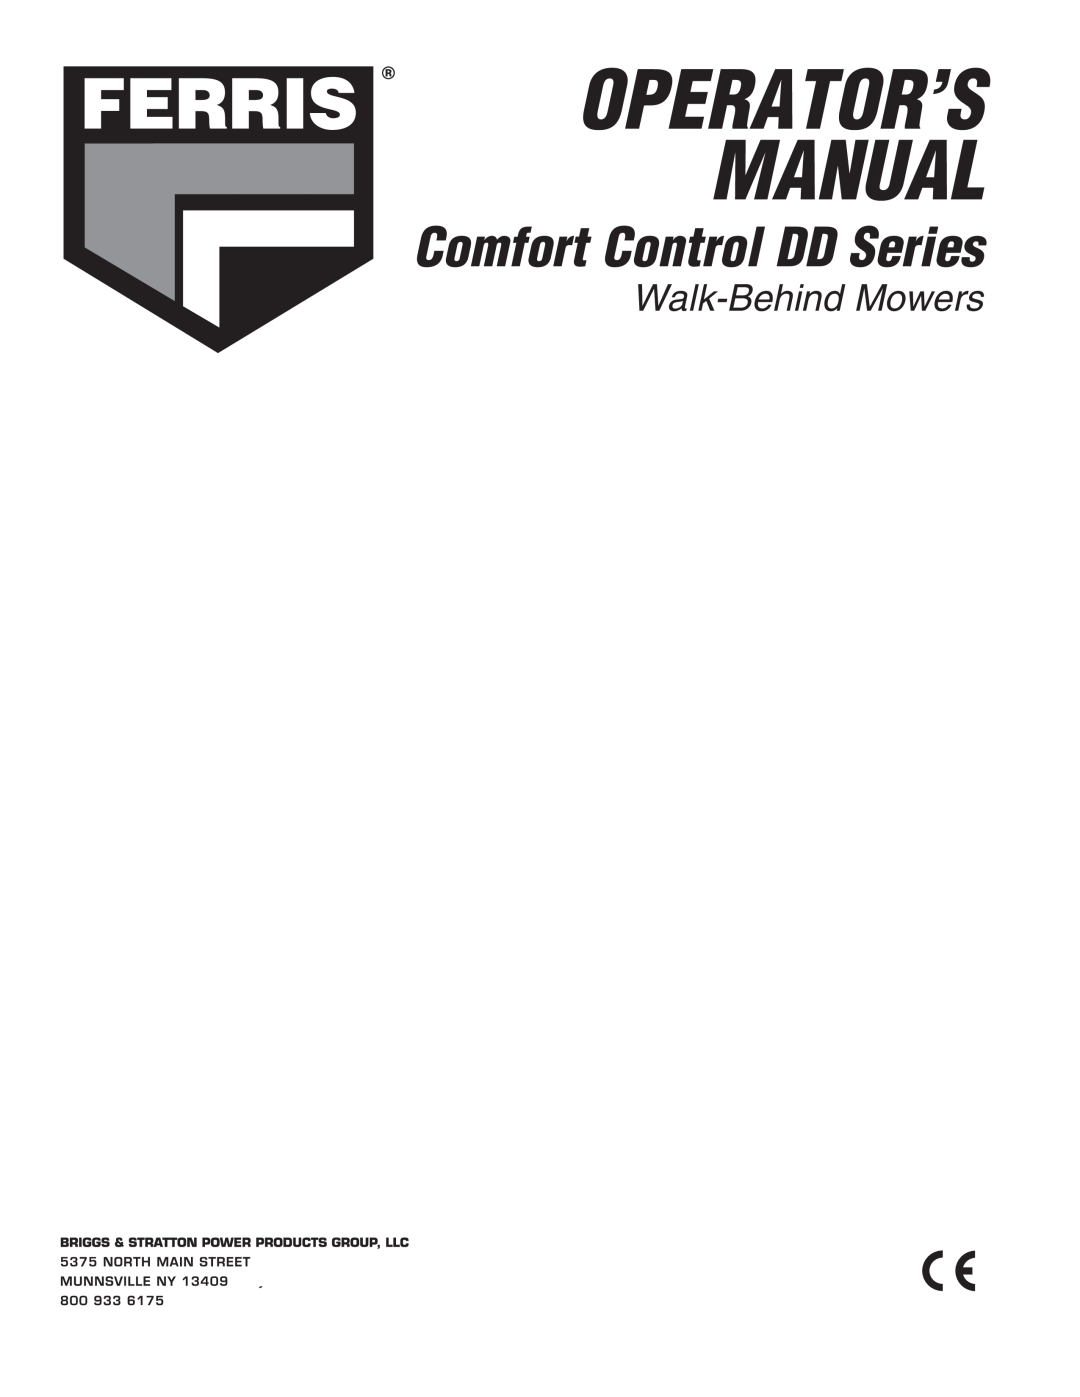 Ferris Industries 5900647, 5900645, 5900636, 5900646 manual Operator’S Manual, Comfort Control DD Series, Walk-Behind Mowers 